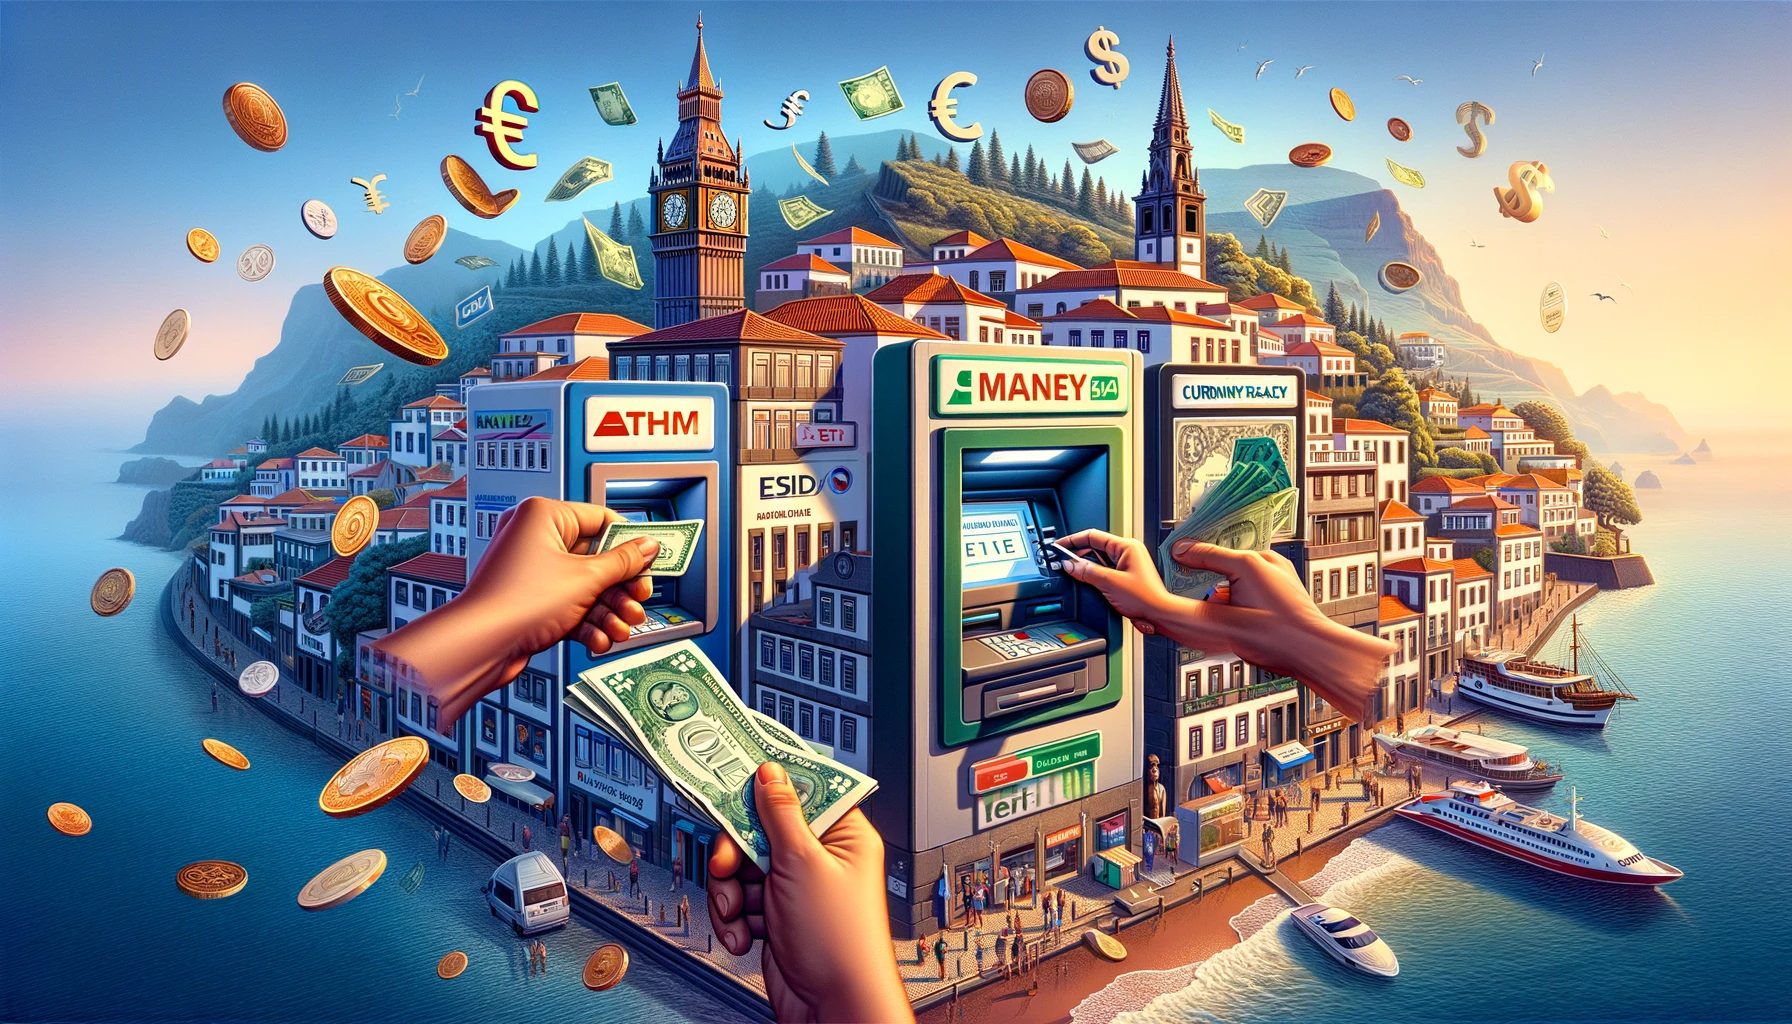 Surreal financial-themed coastal town illustration.